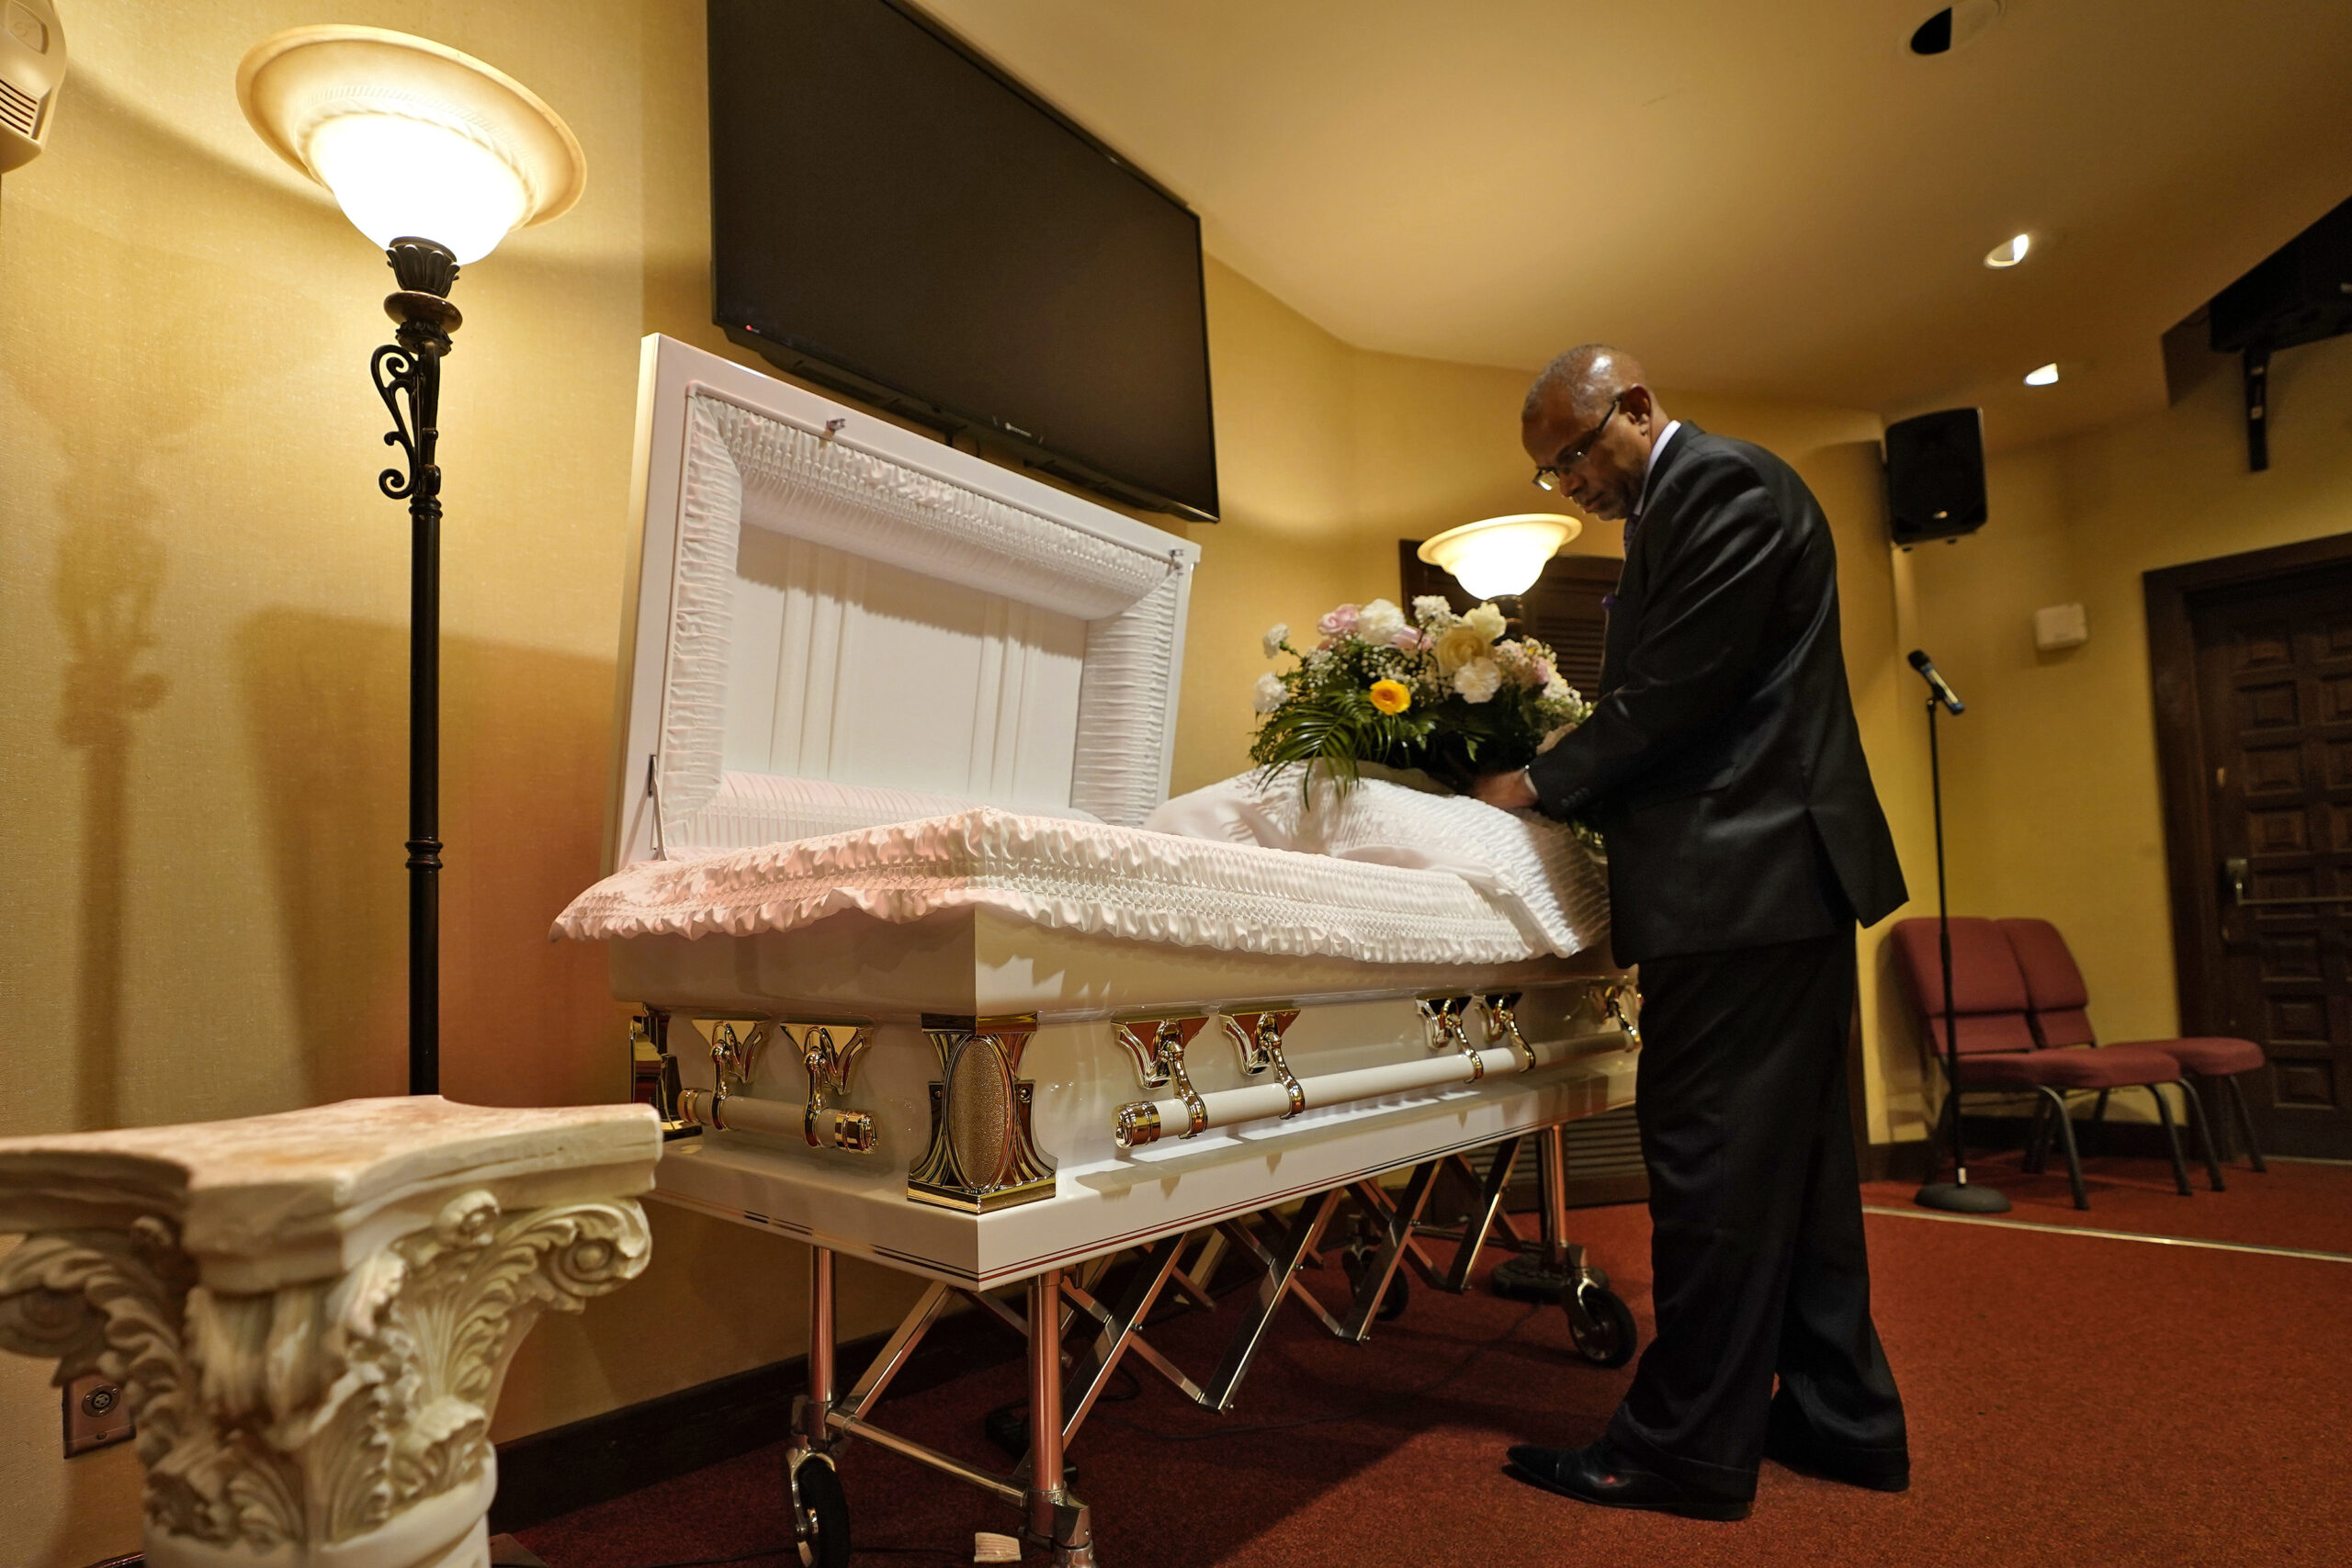 a funeral director arranges flowers on a casket